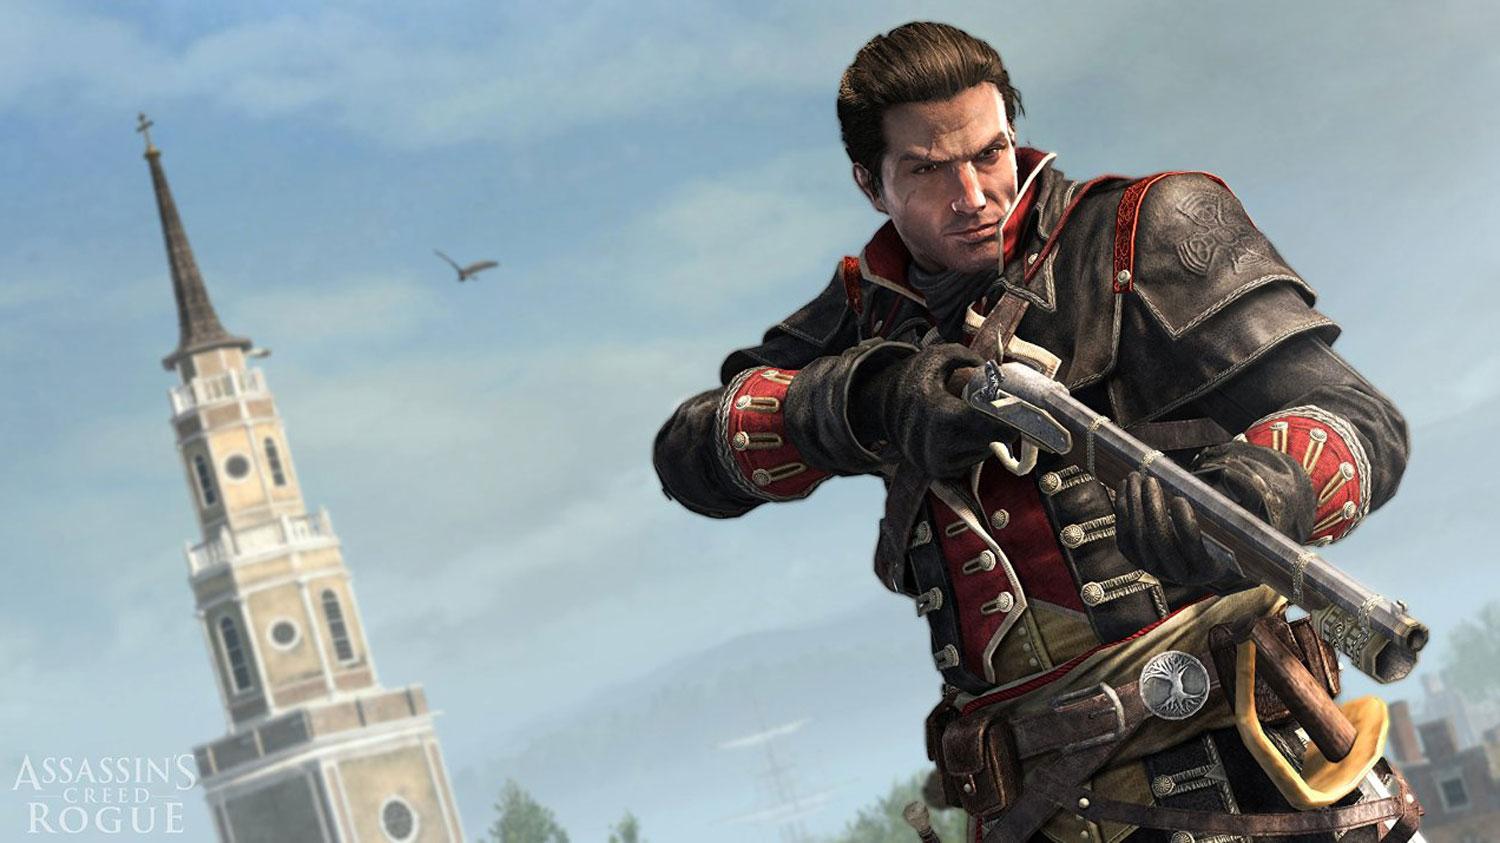 Assassin s Creed: Rogue